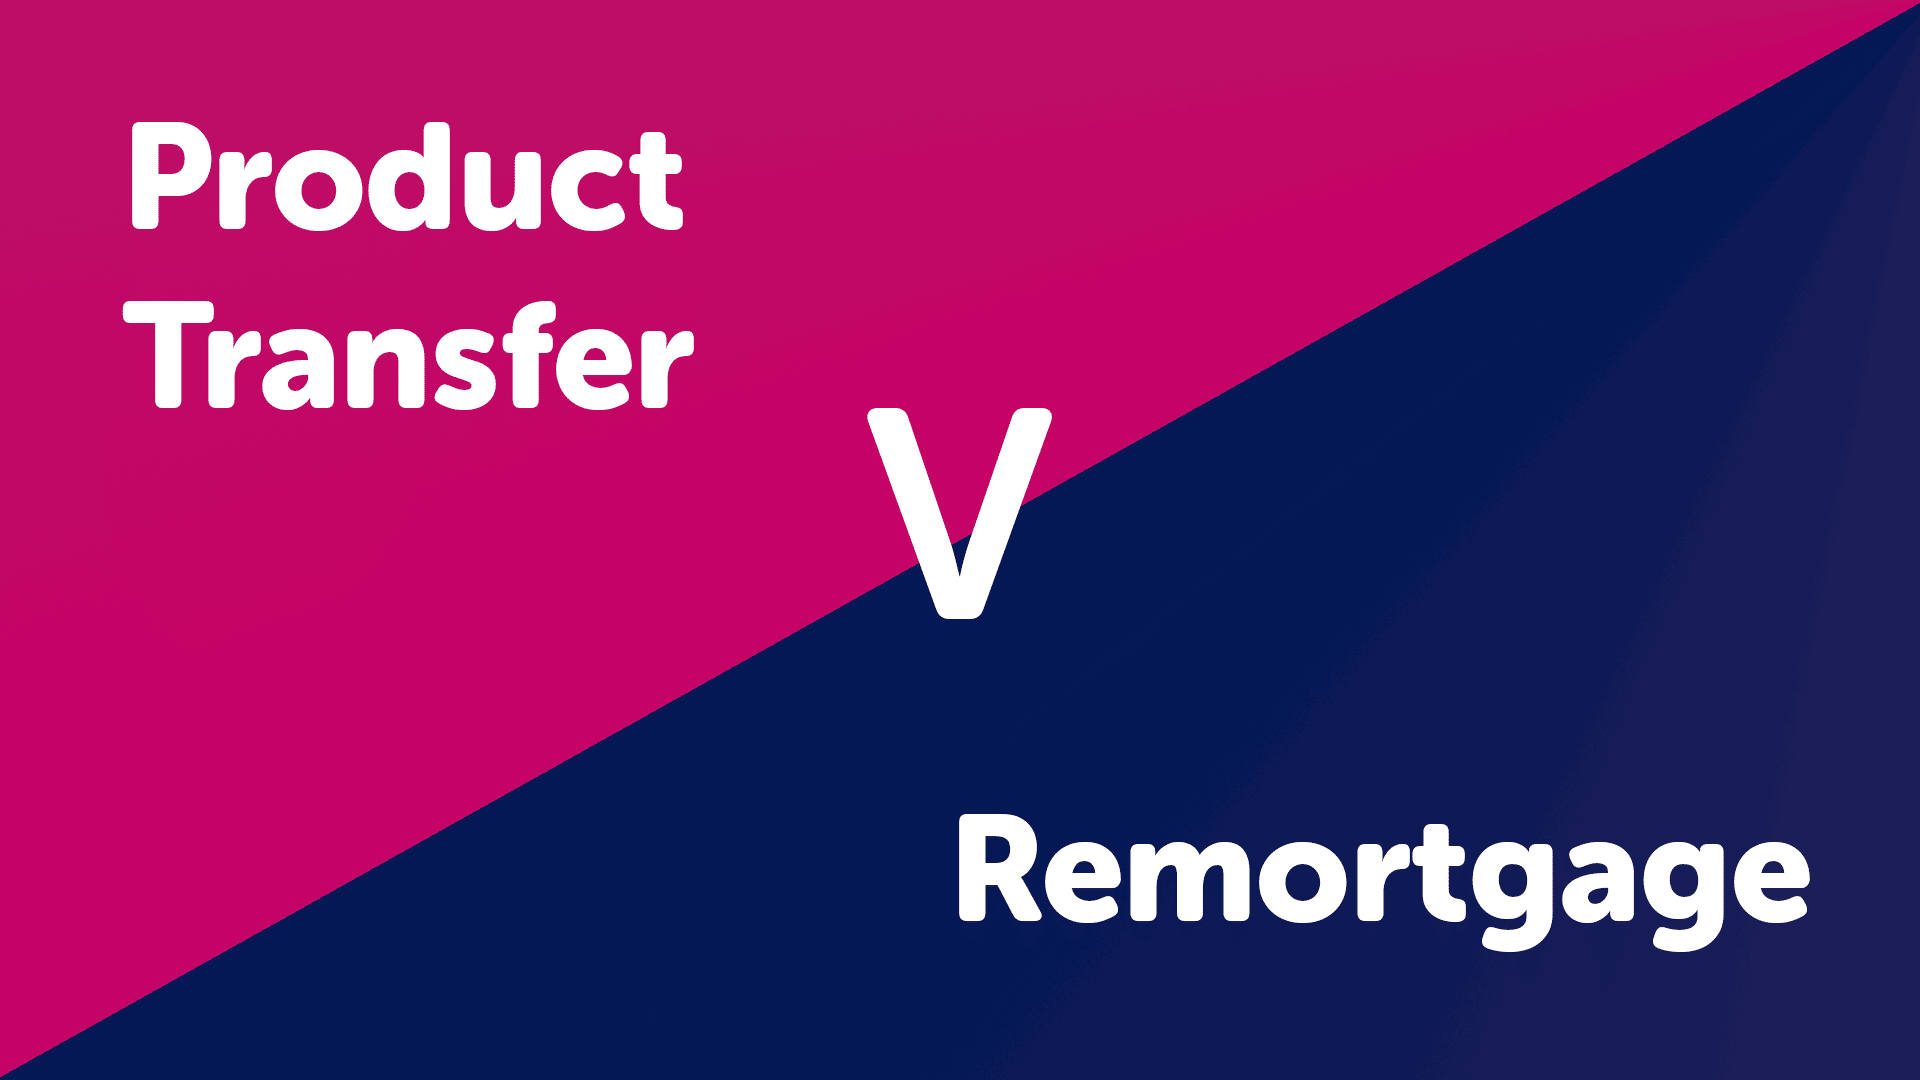 Product Transfer v Remortgage in Sunderland